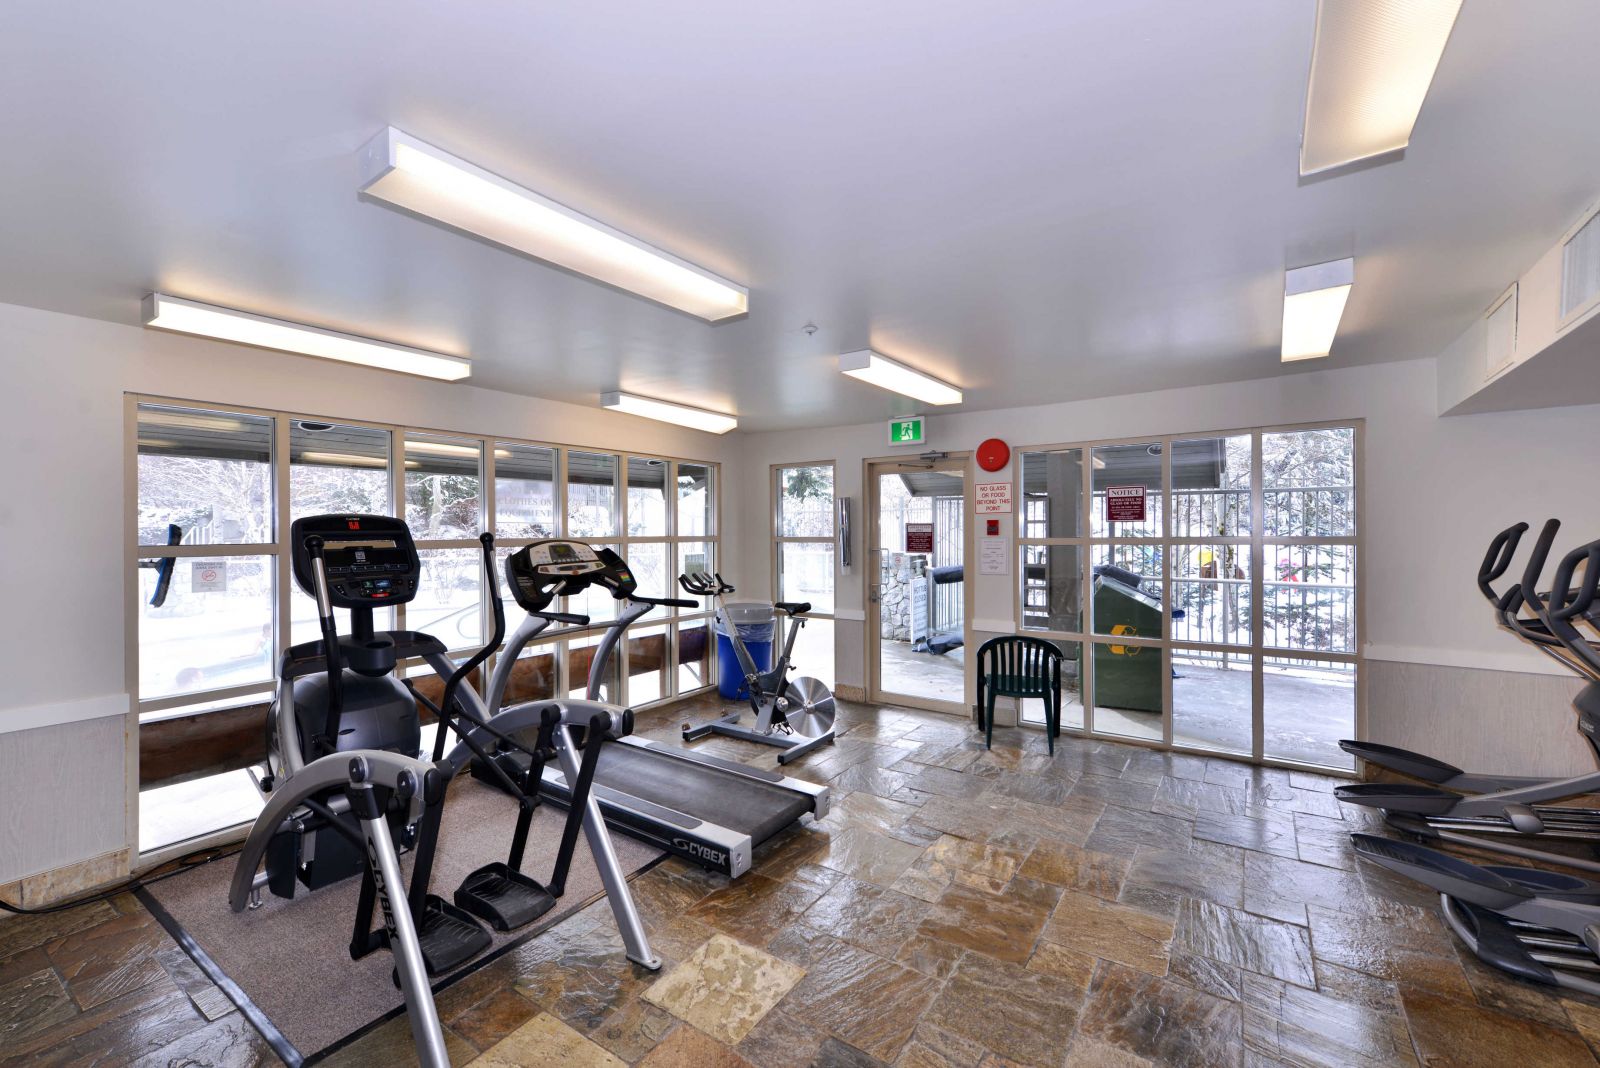 Aspens Lodge workout facility